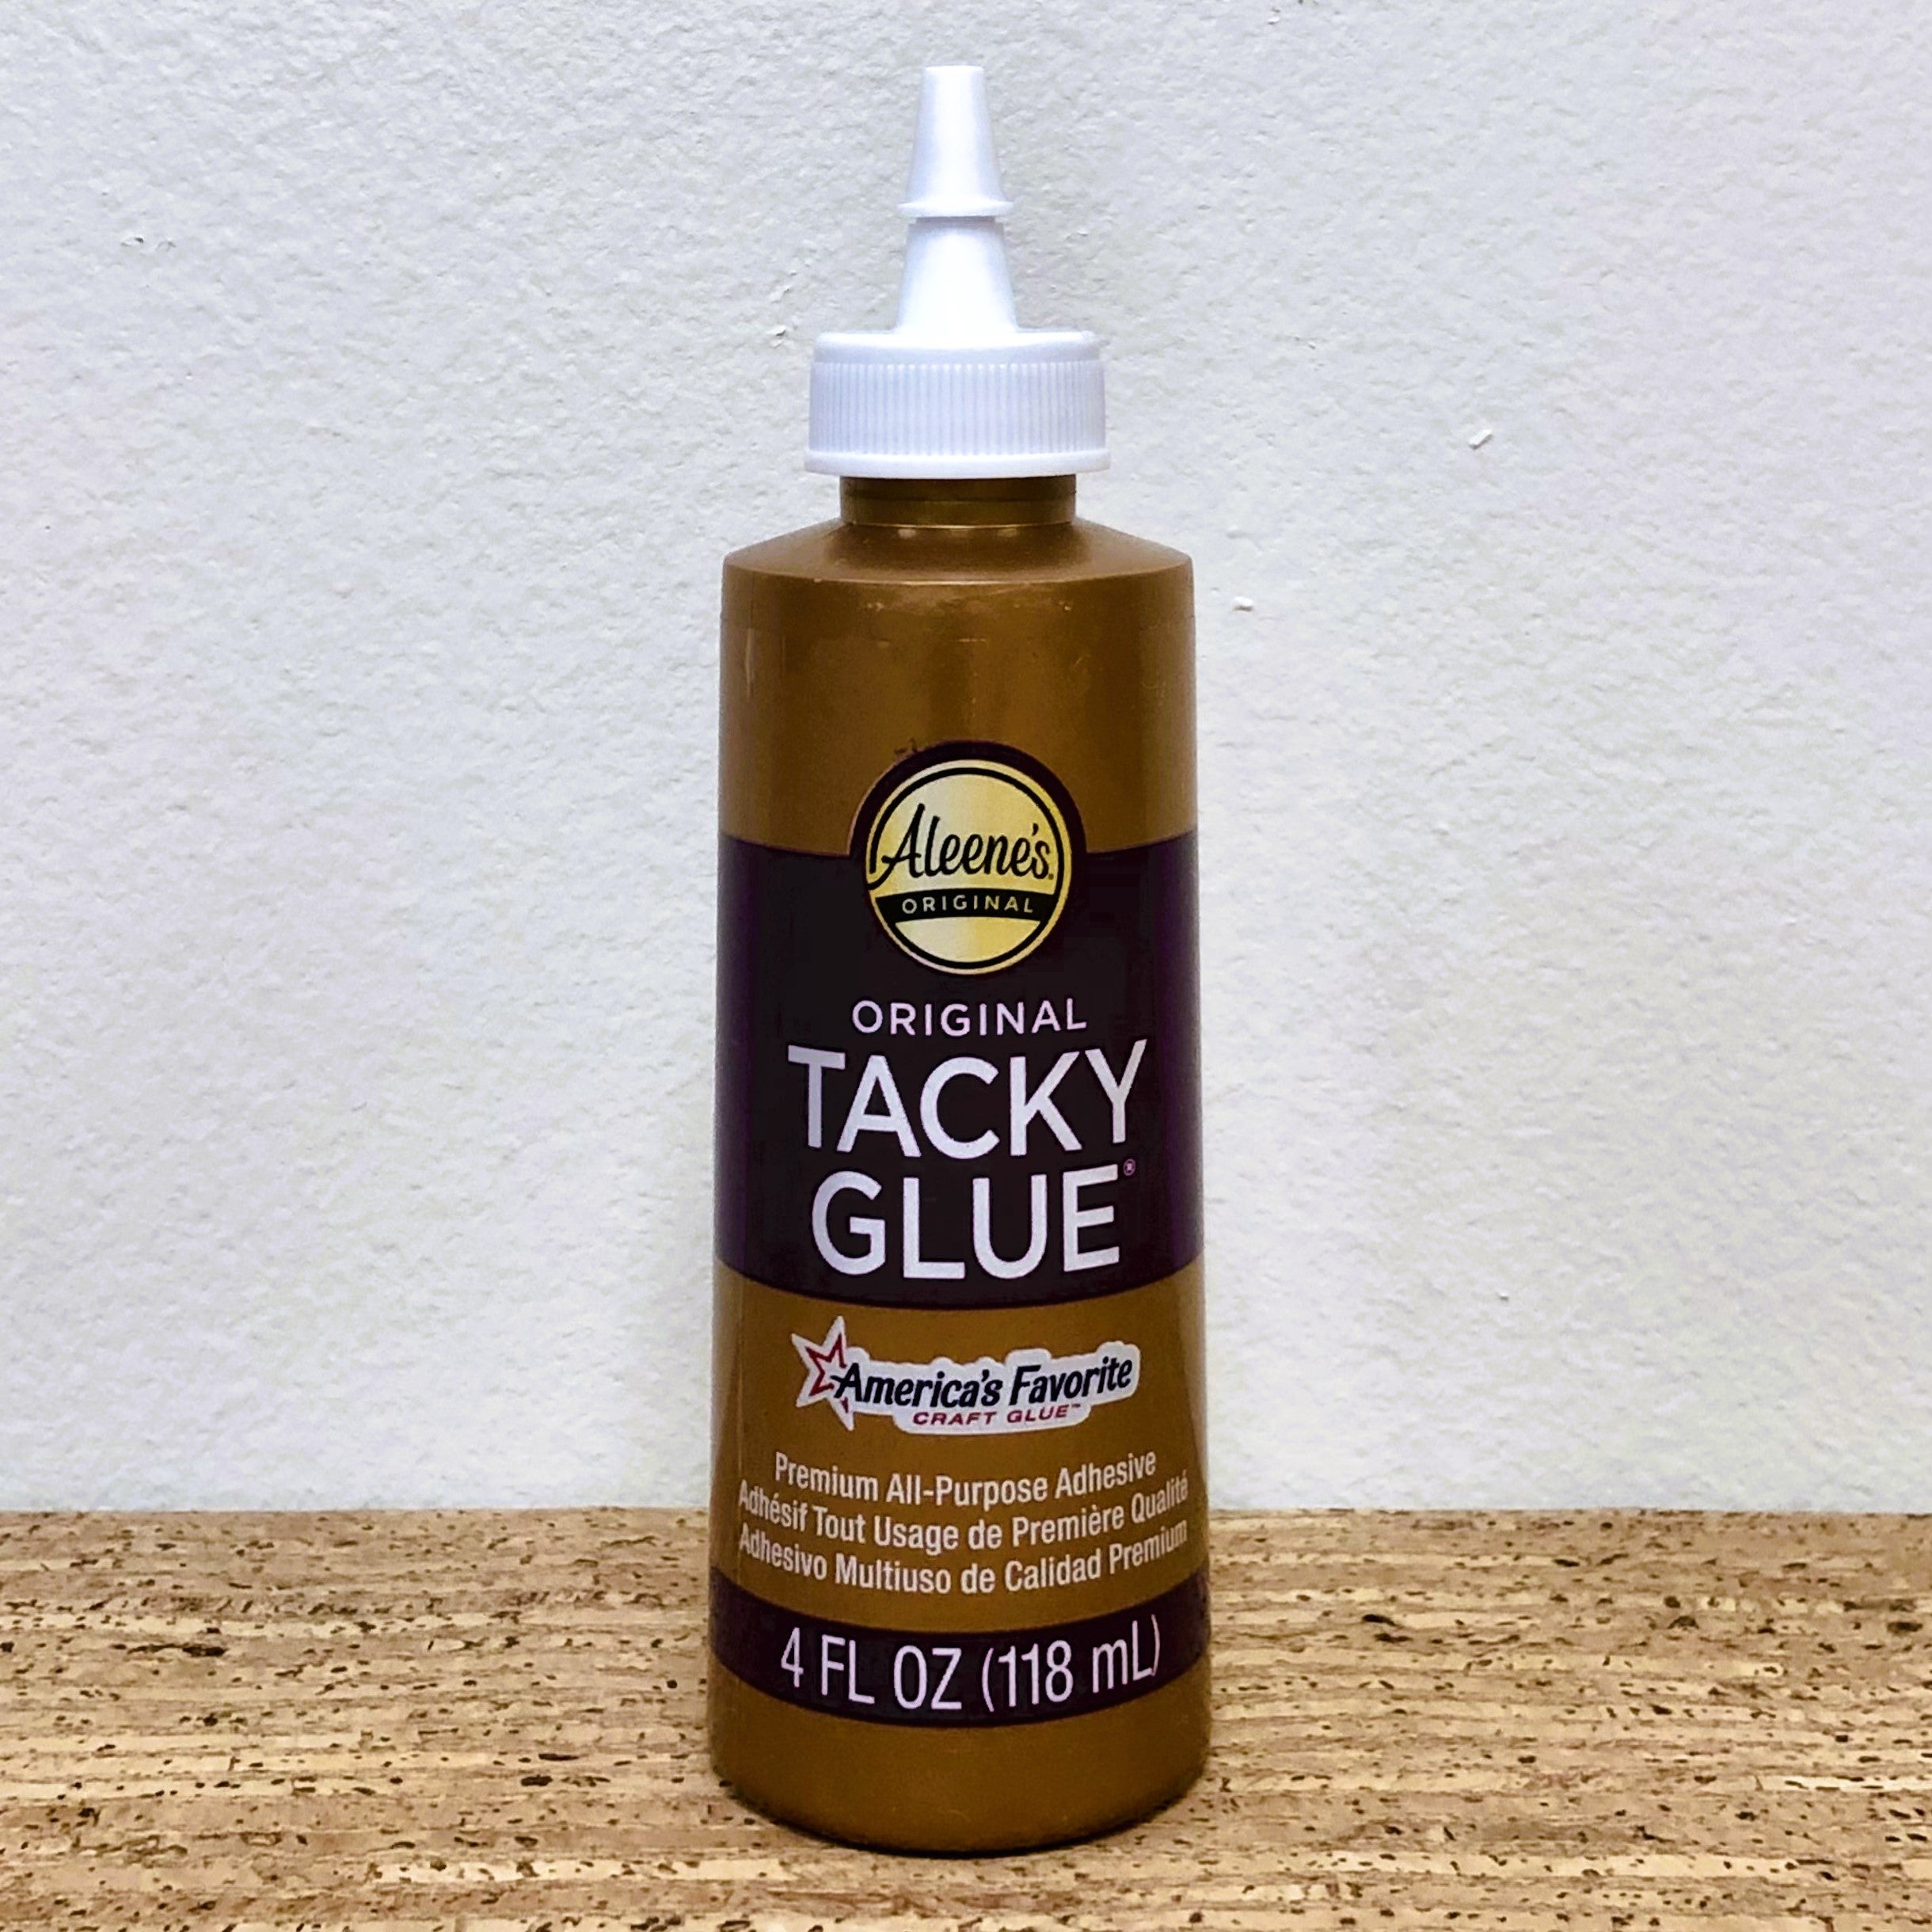  Aleene's Original 3PK Tacky Glue, 4 fl oz - 3 Pack